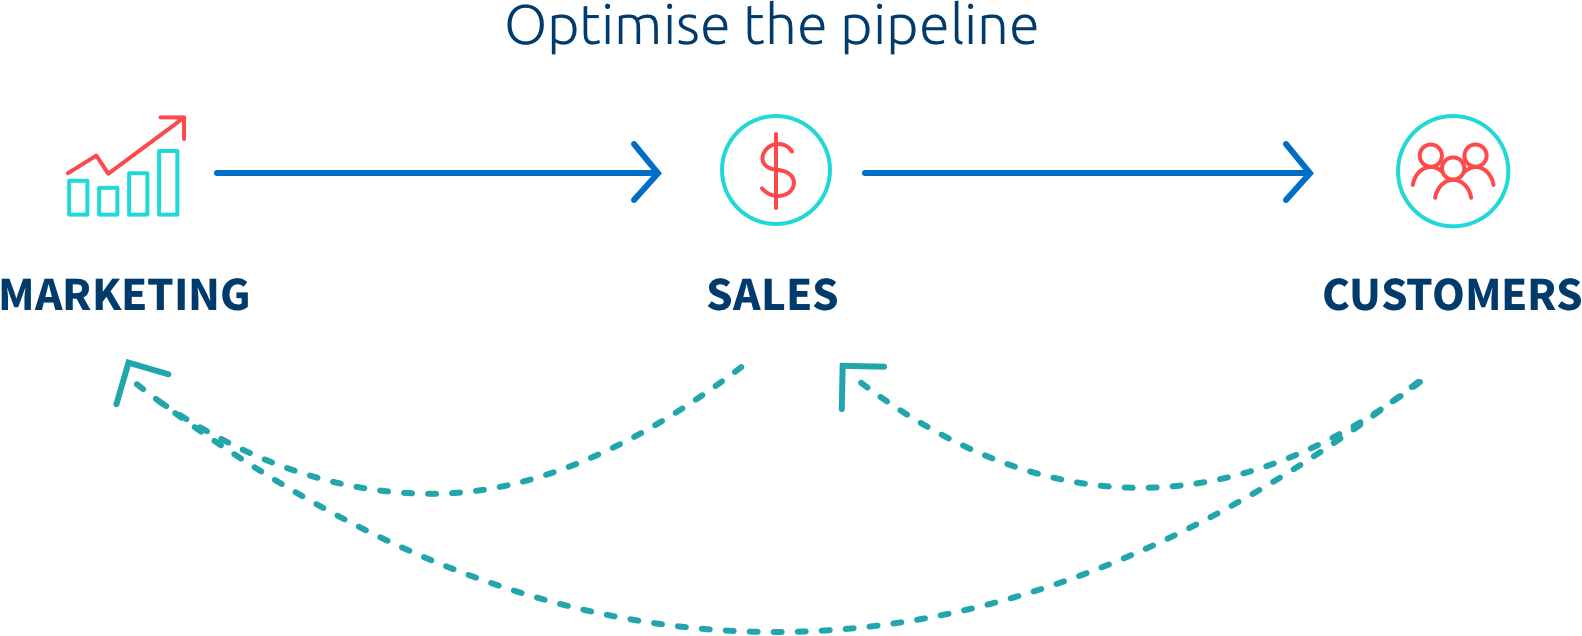 sales enablement optimises the pipeline